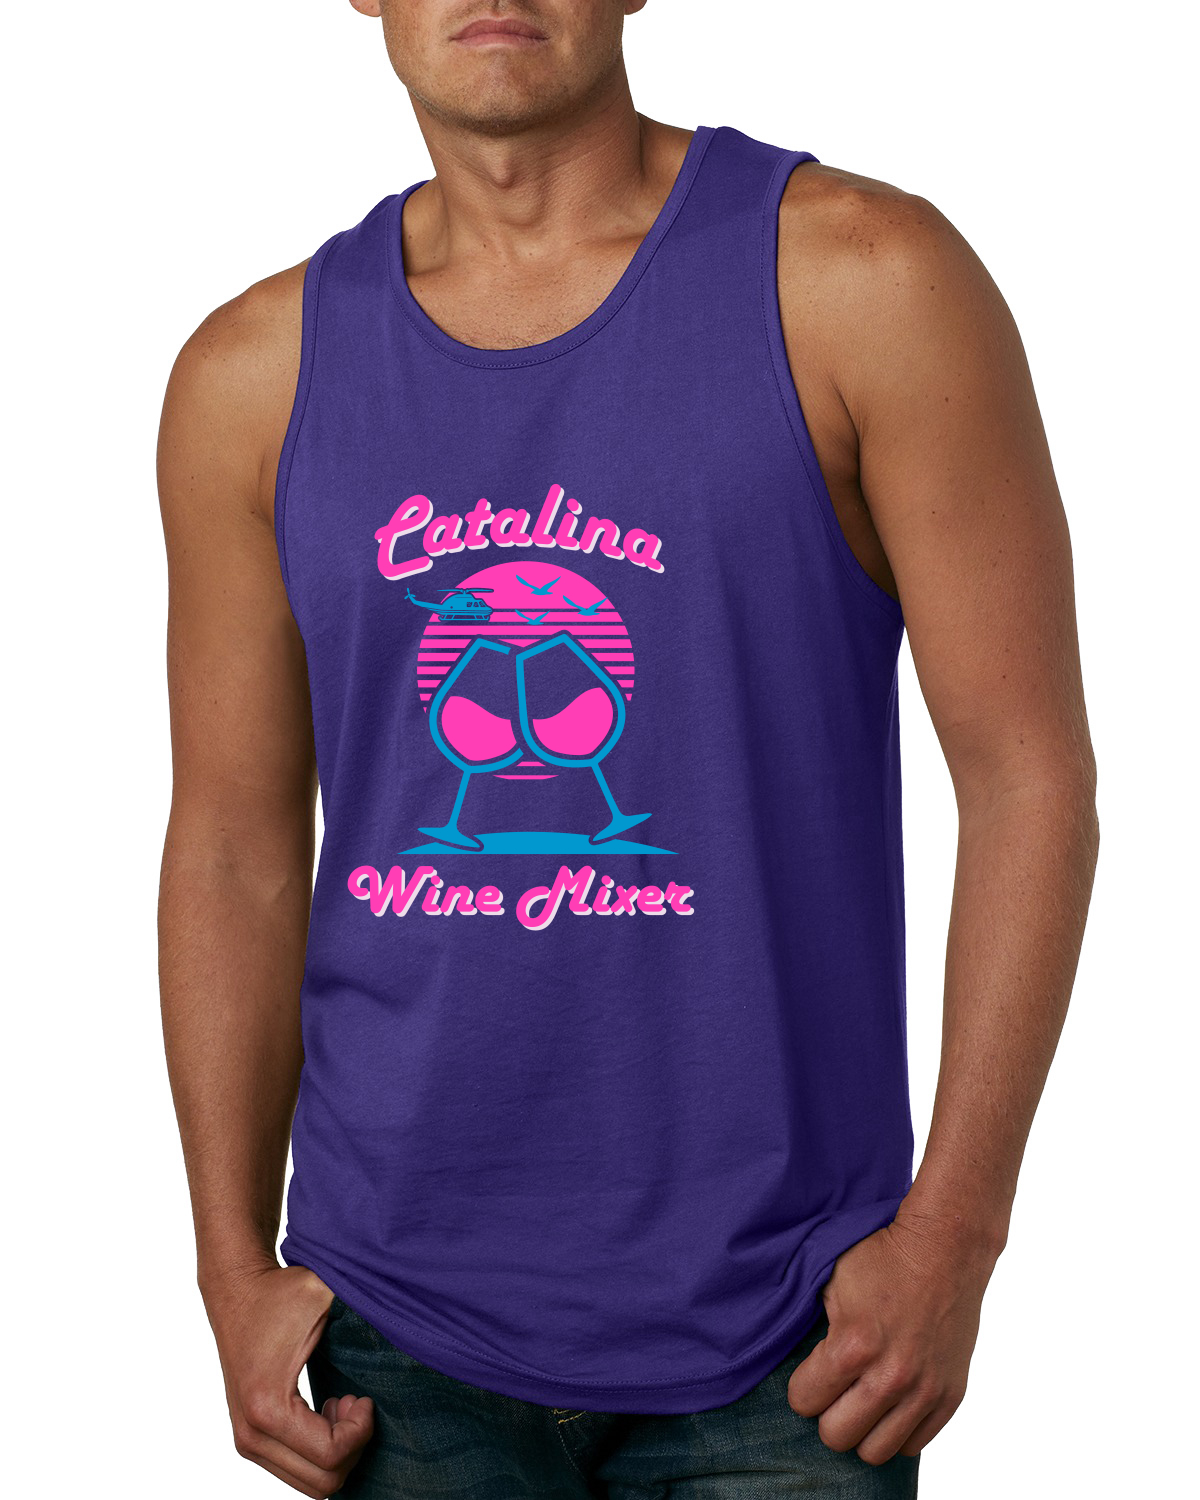 Catalina Wine Mixer Island Prestige Movie| Mens Pop Culture Graphic Tank Top, Purple, 3XL - image 1 of 4